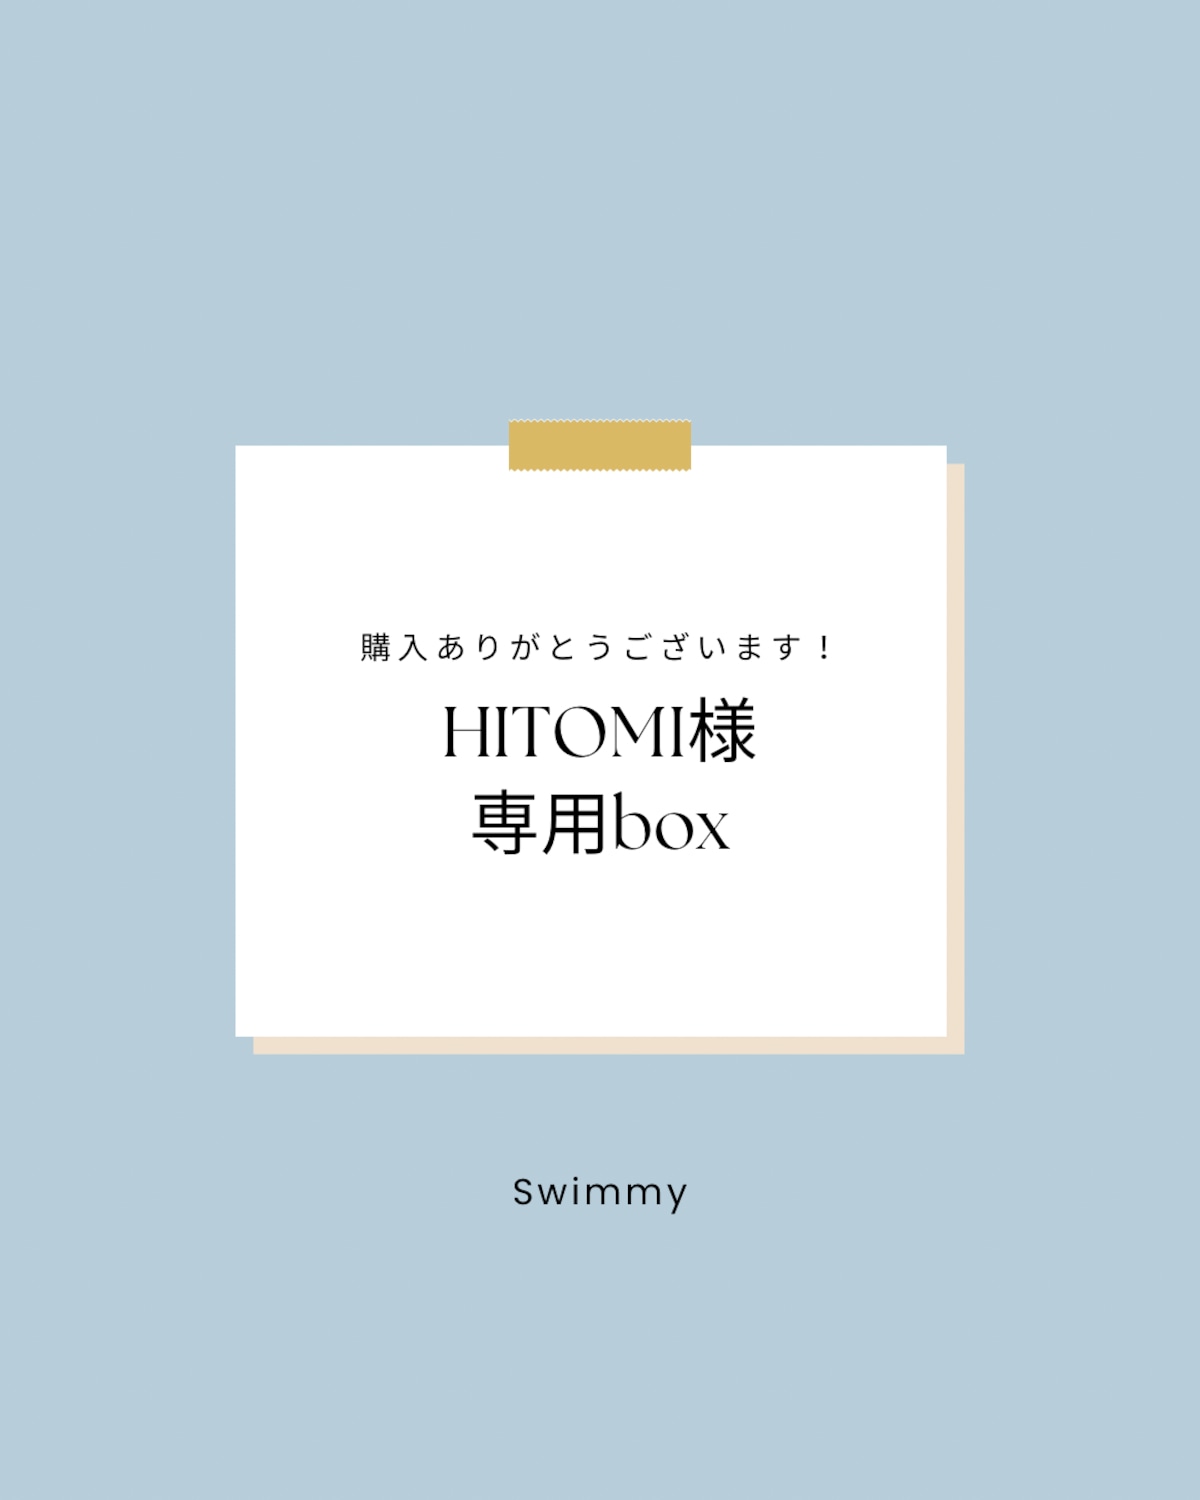 HITOMI様専用box | Swimmy powered by BASE